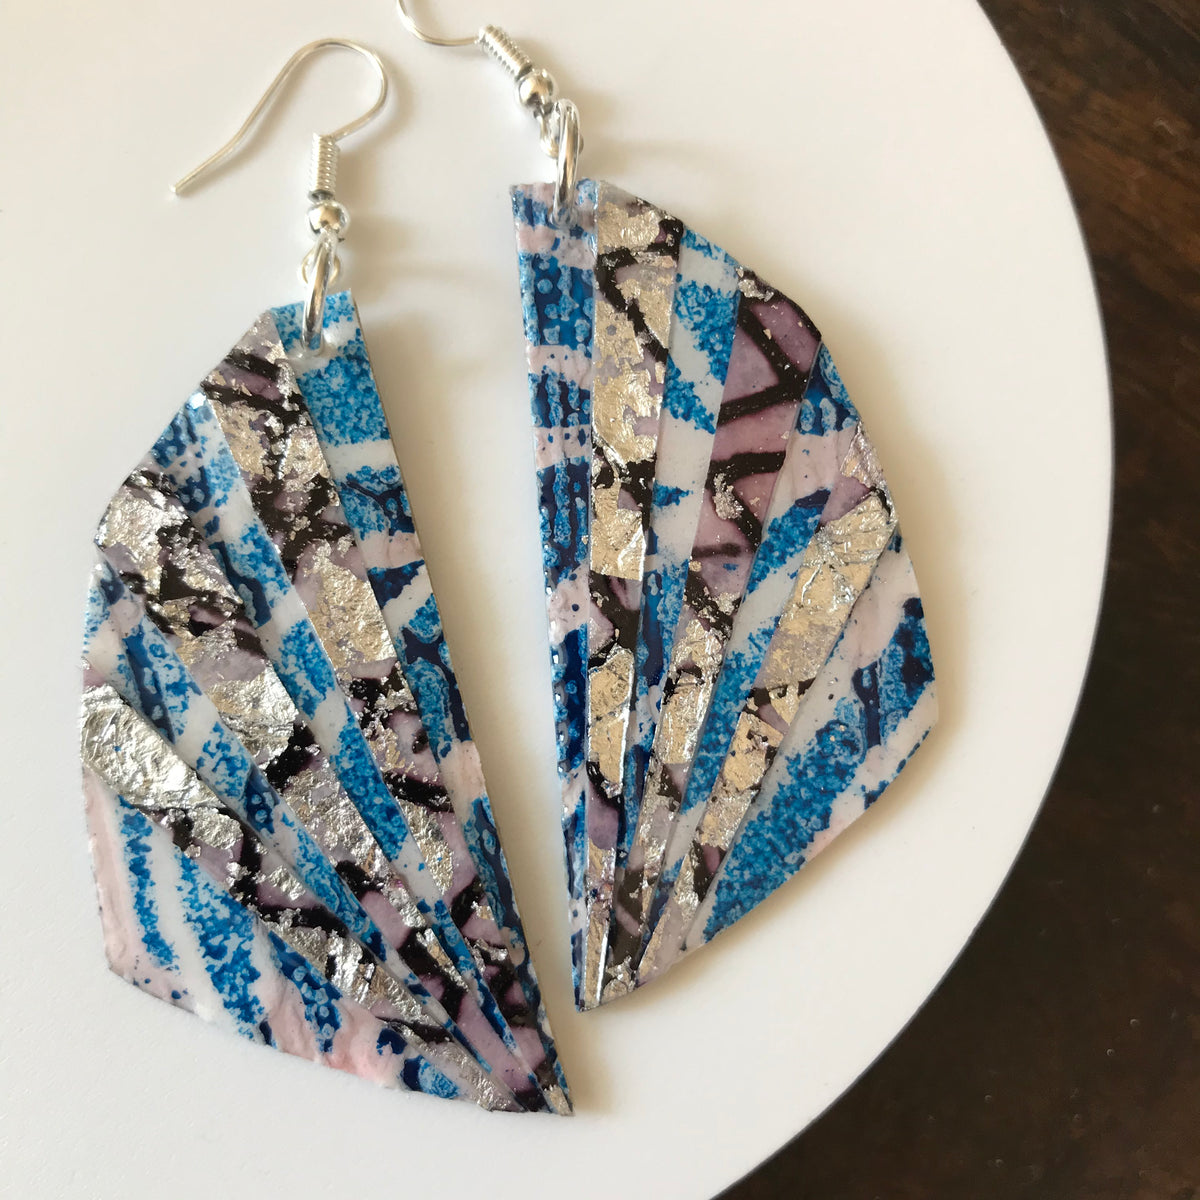 Searchlight batik textile earrings in cobalt/silver/aubergine